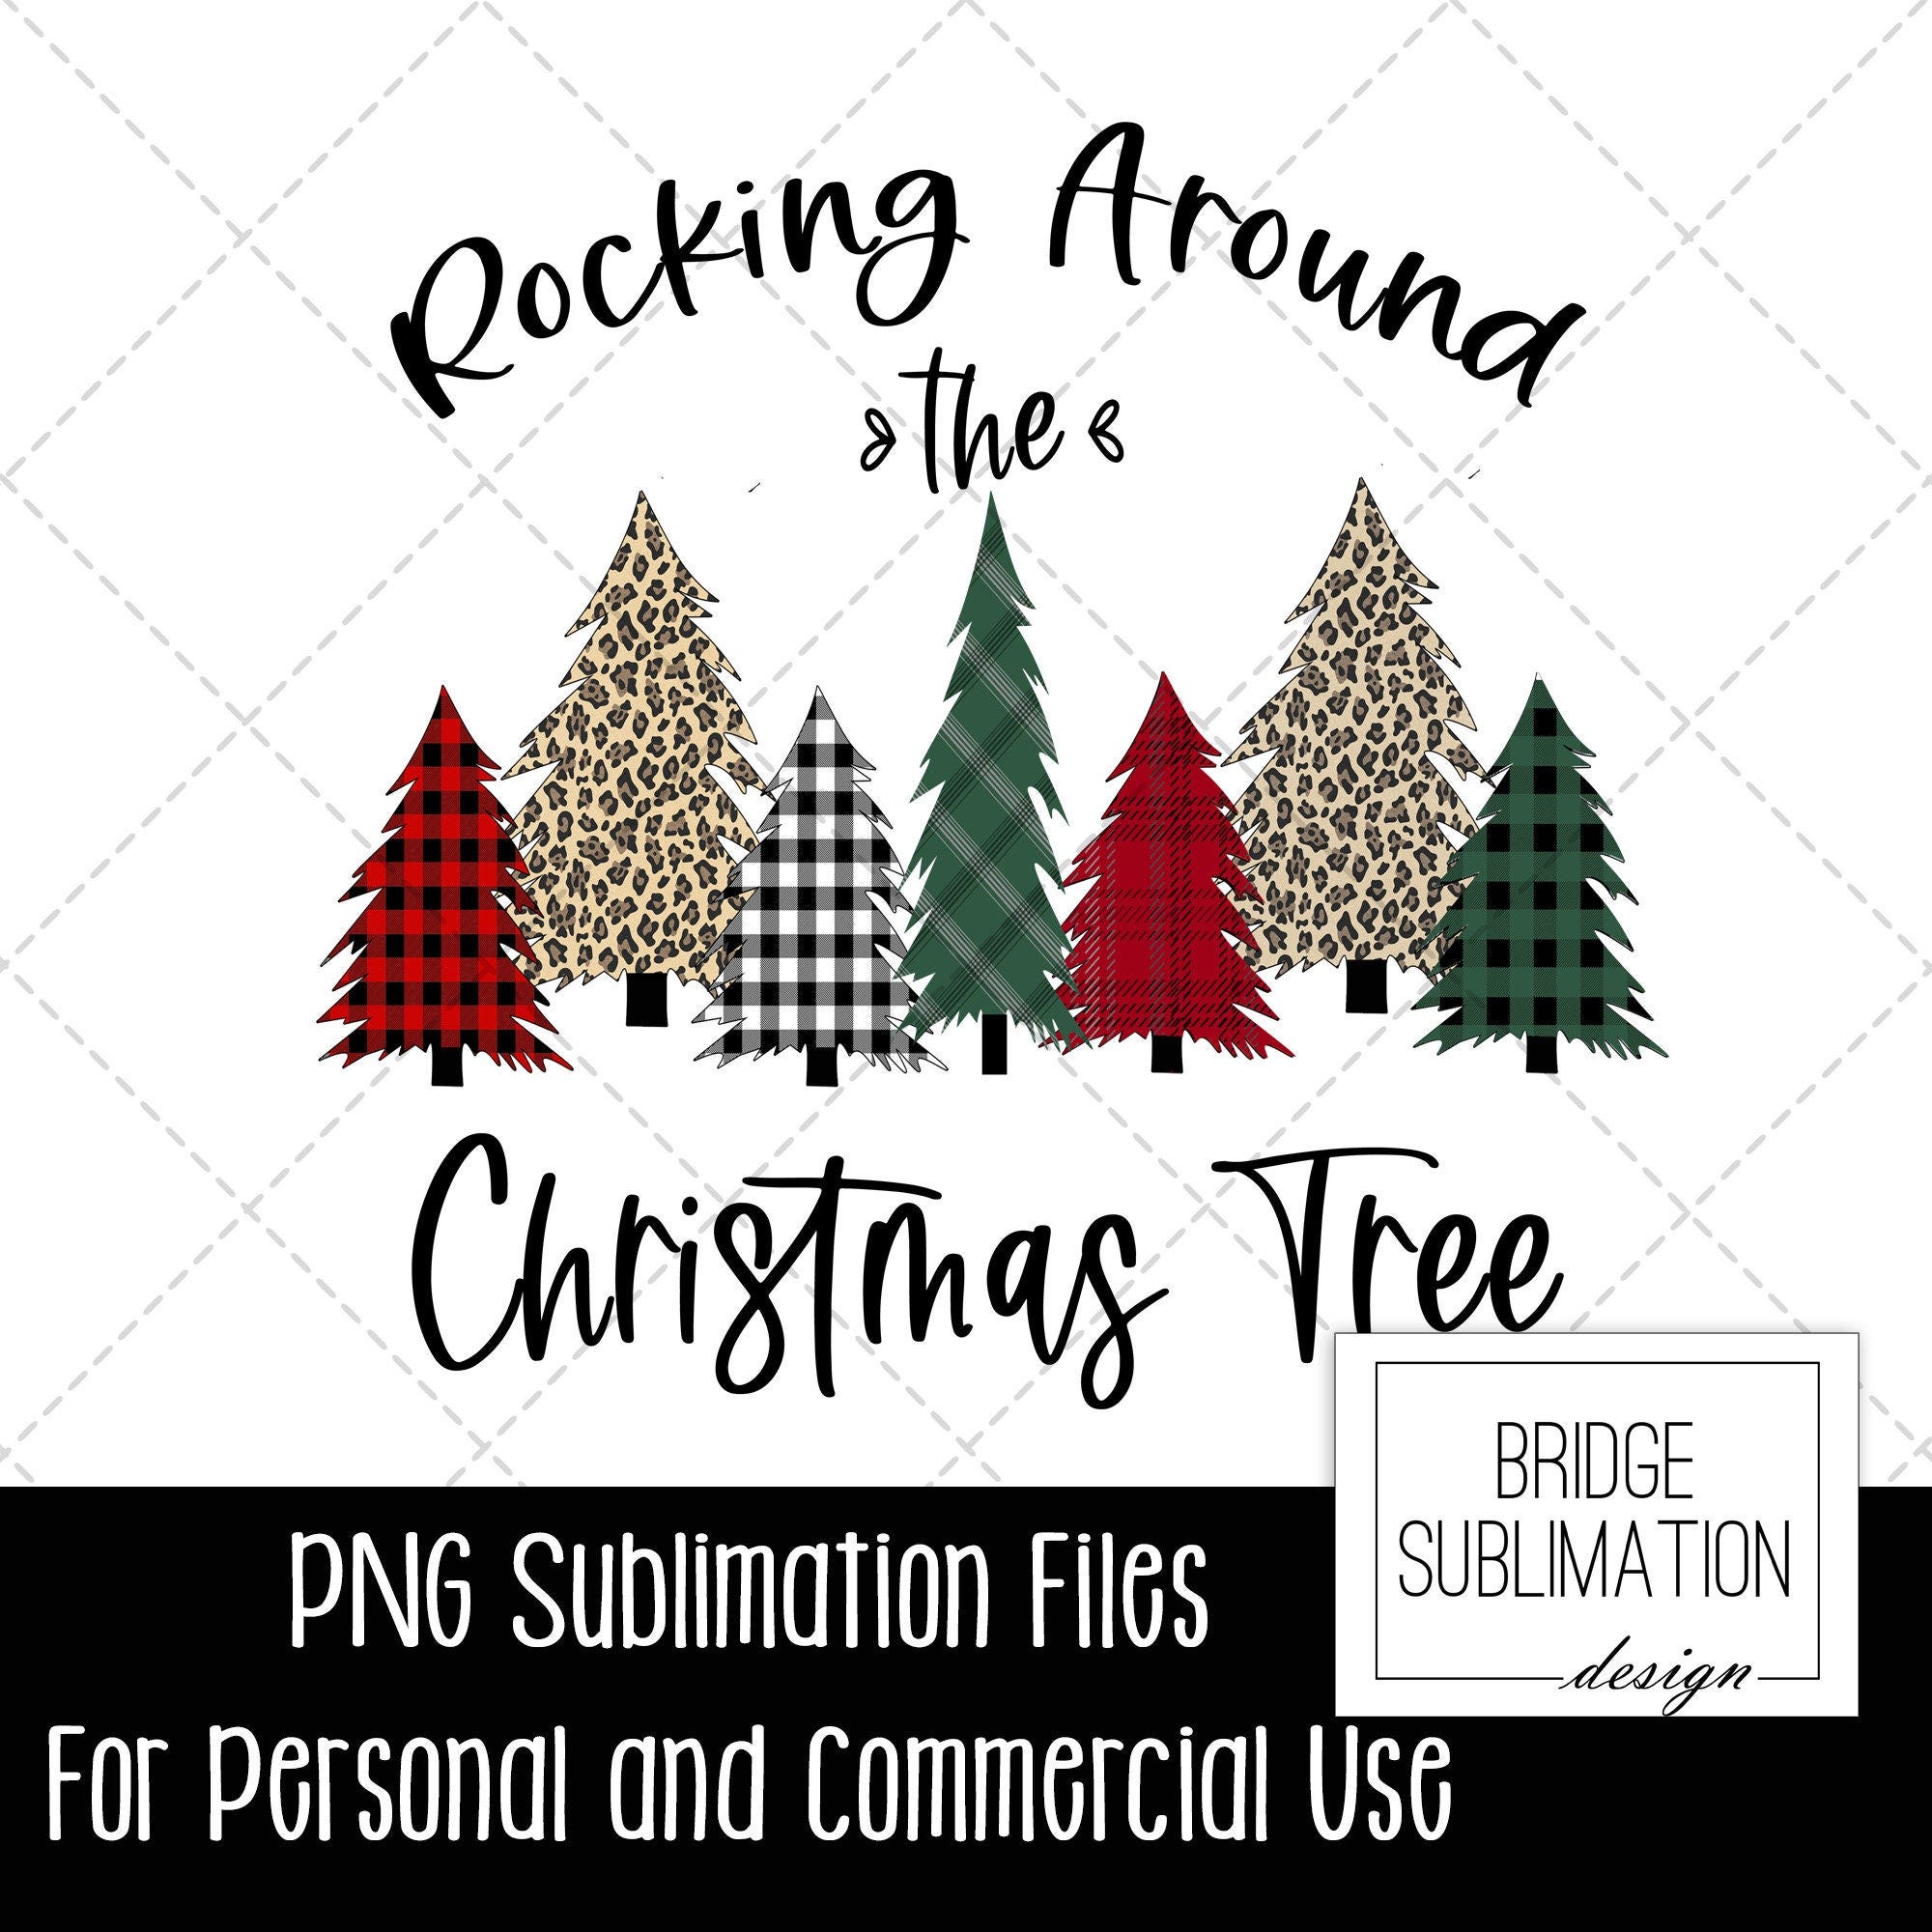 Rocking Around The Christmas Tree PNG, Instant Digital Download, Sublimation Designs, Christmas Sublimation, Buffalo Plaid Animal Print Tree